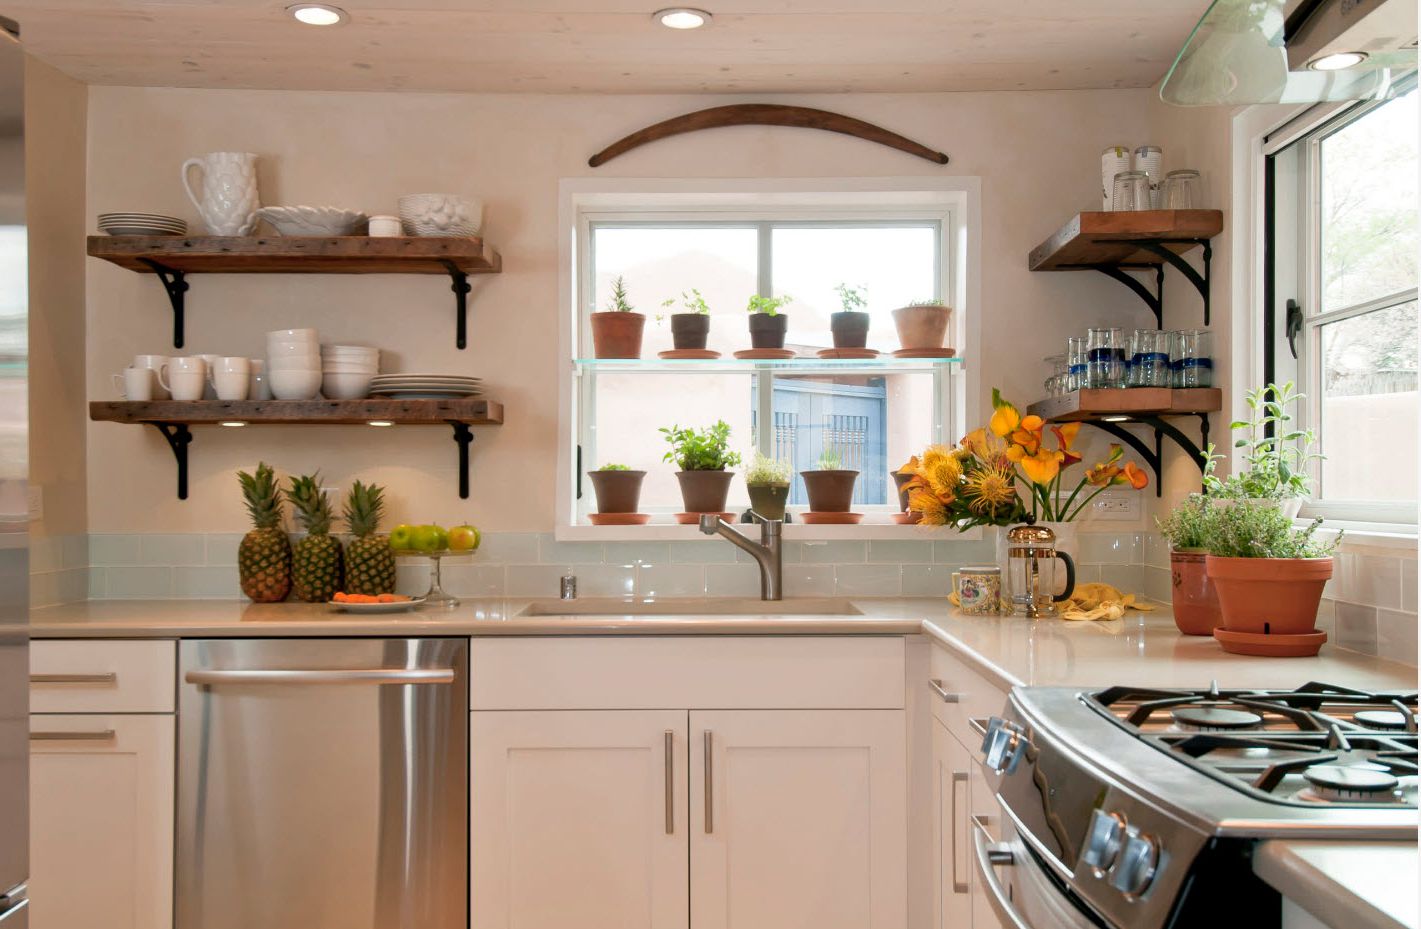 Open shelves as a part of a kitchen interior